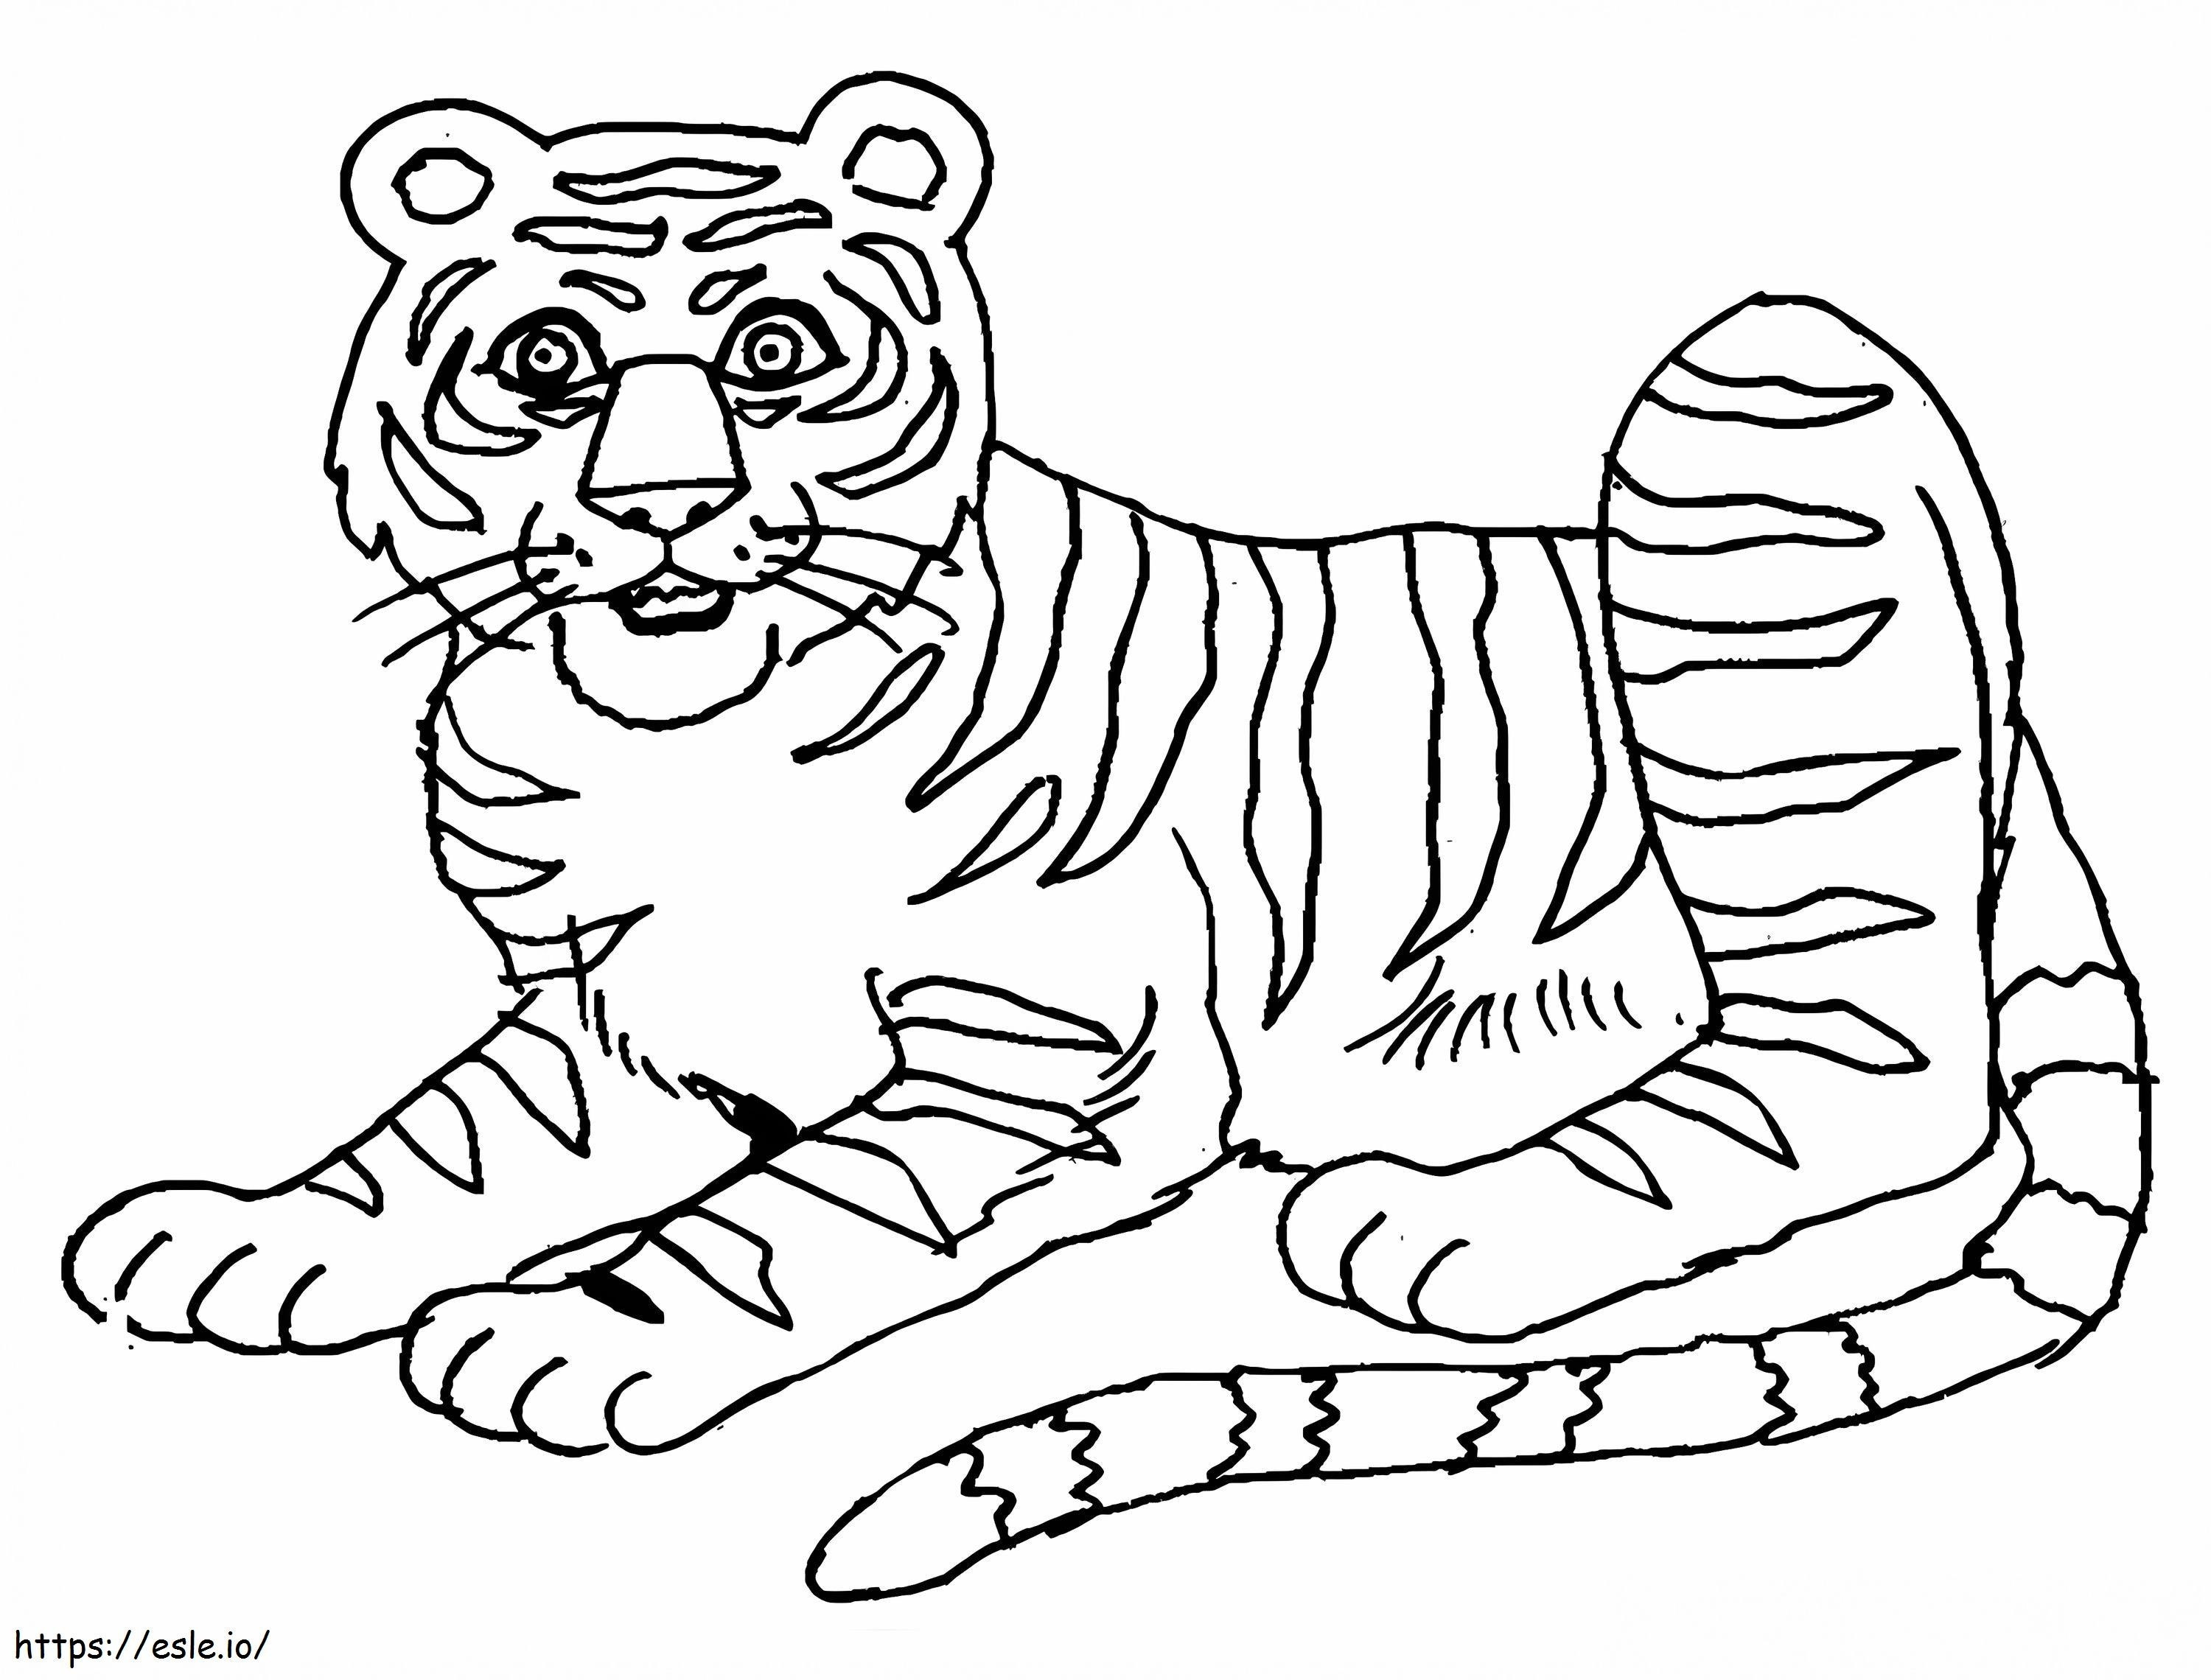 Free Printable Tiger coloring page